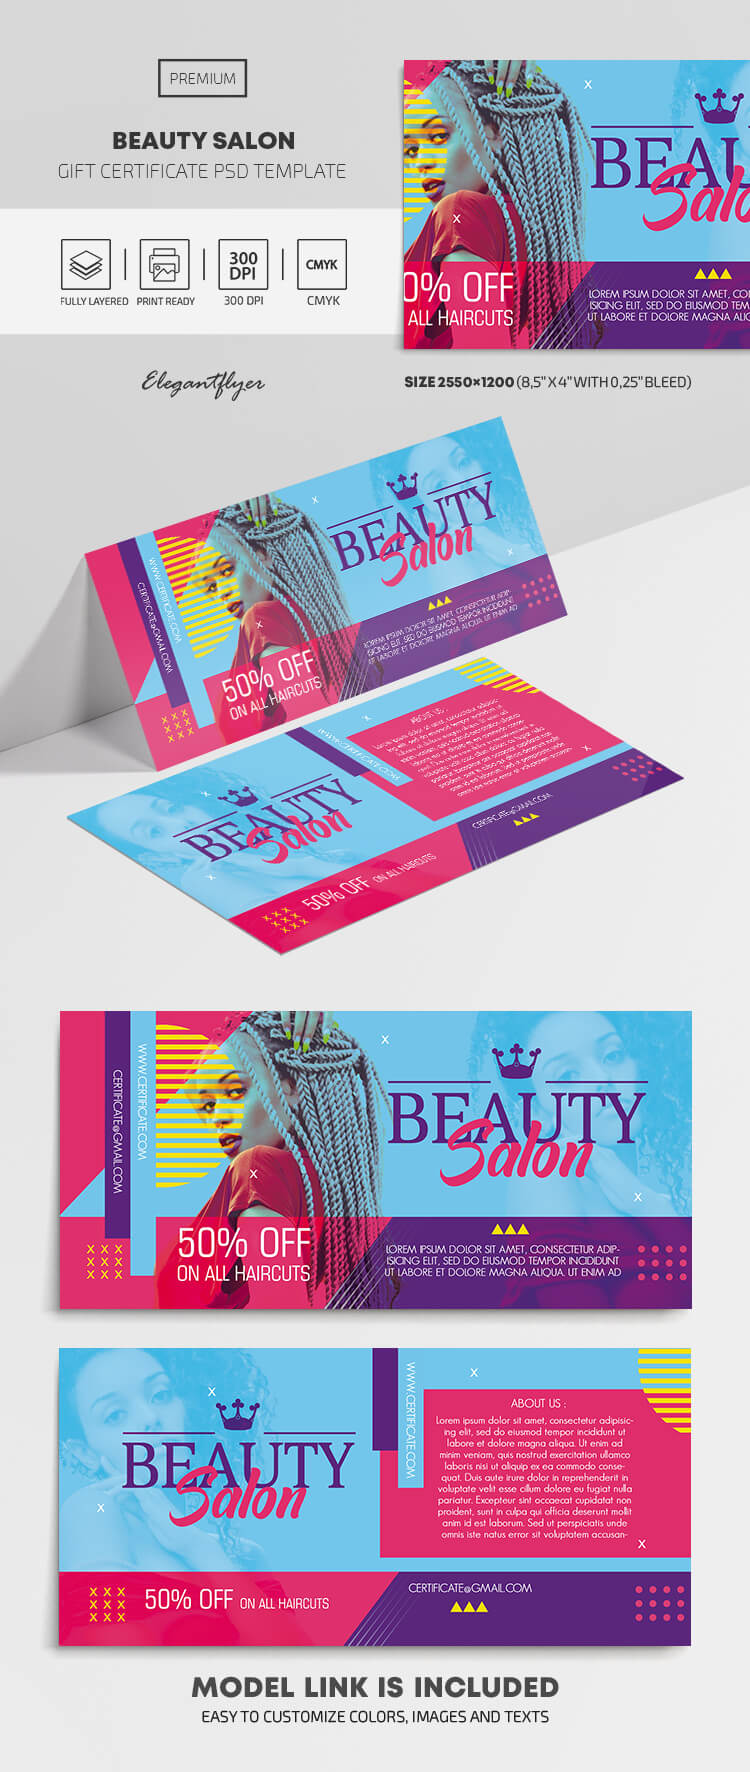 Beauty Salon – Premium Gift Certificate Template In Psd With Gift Certificate Template Photoshop